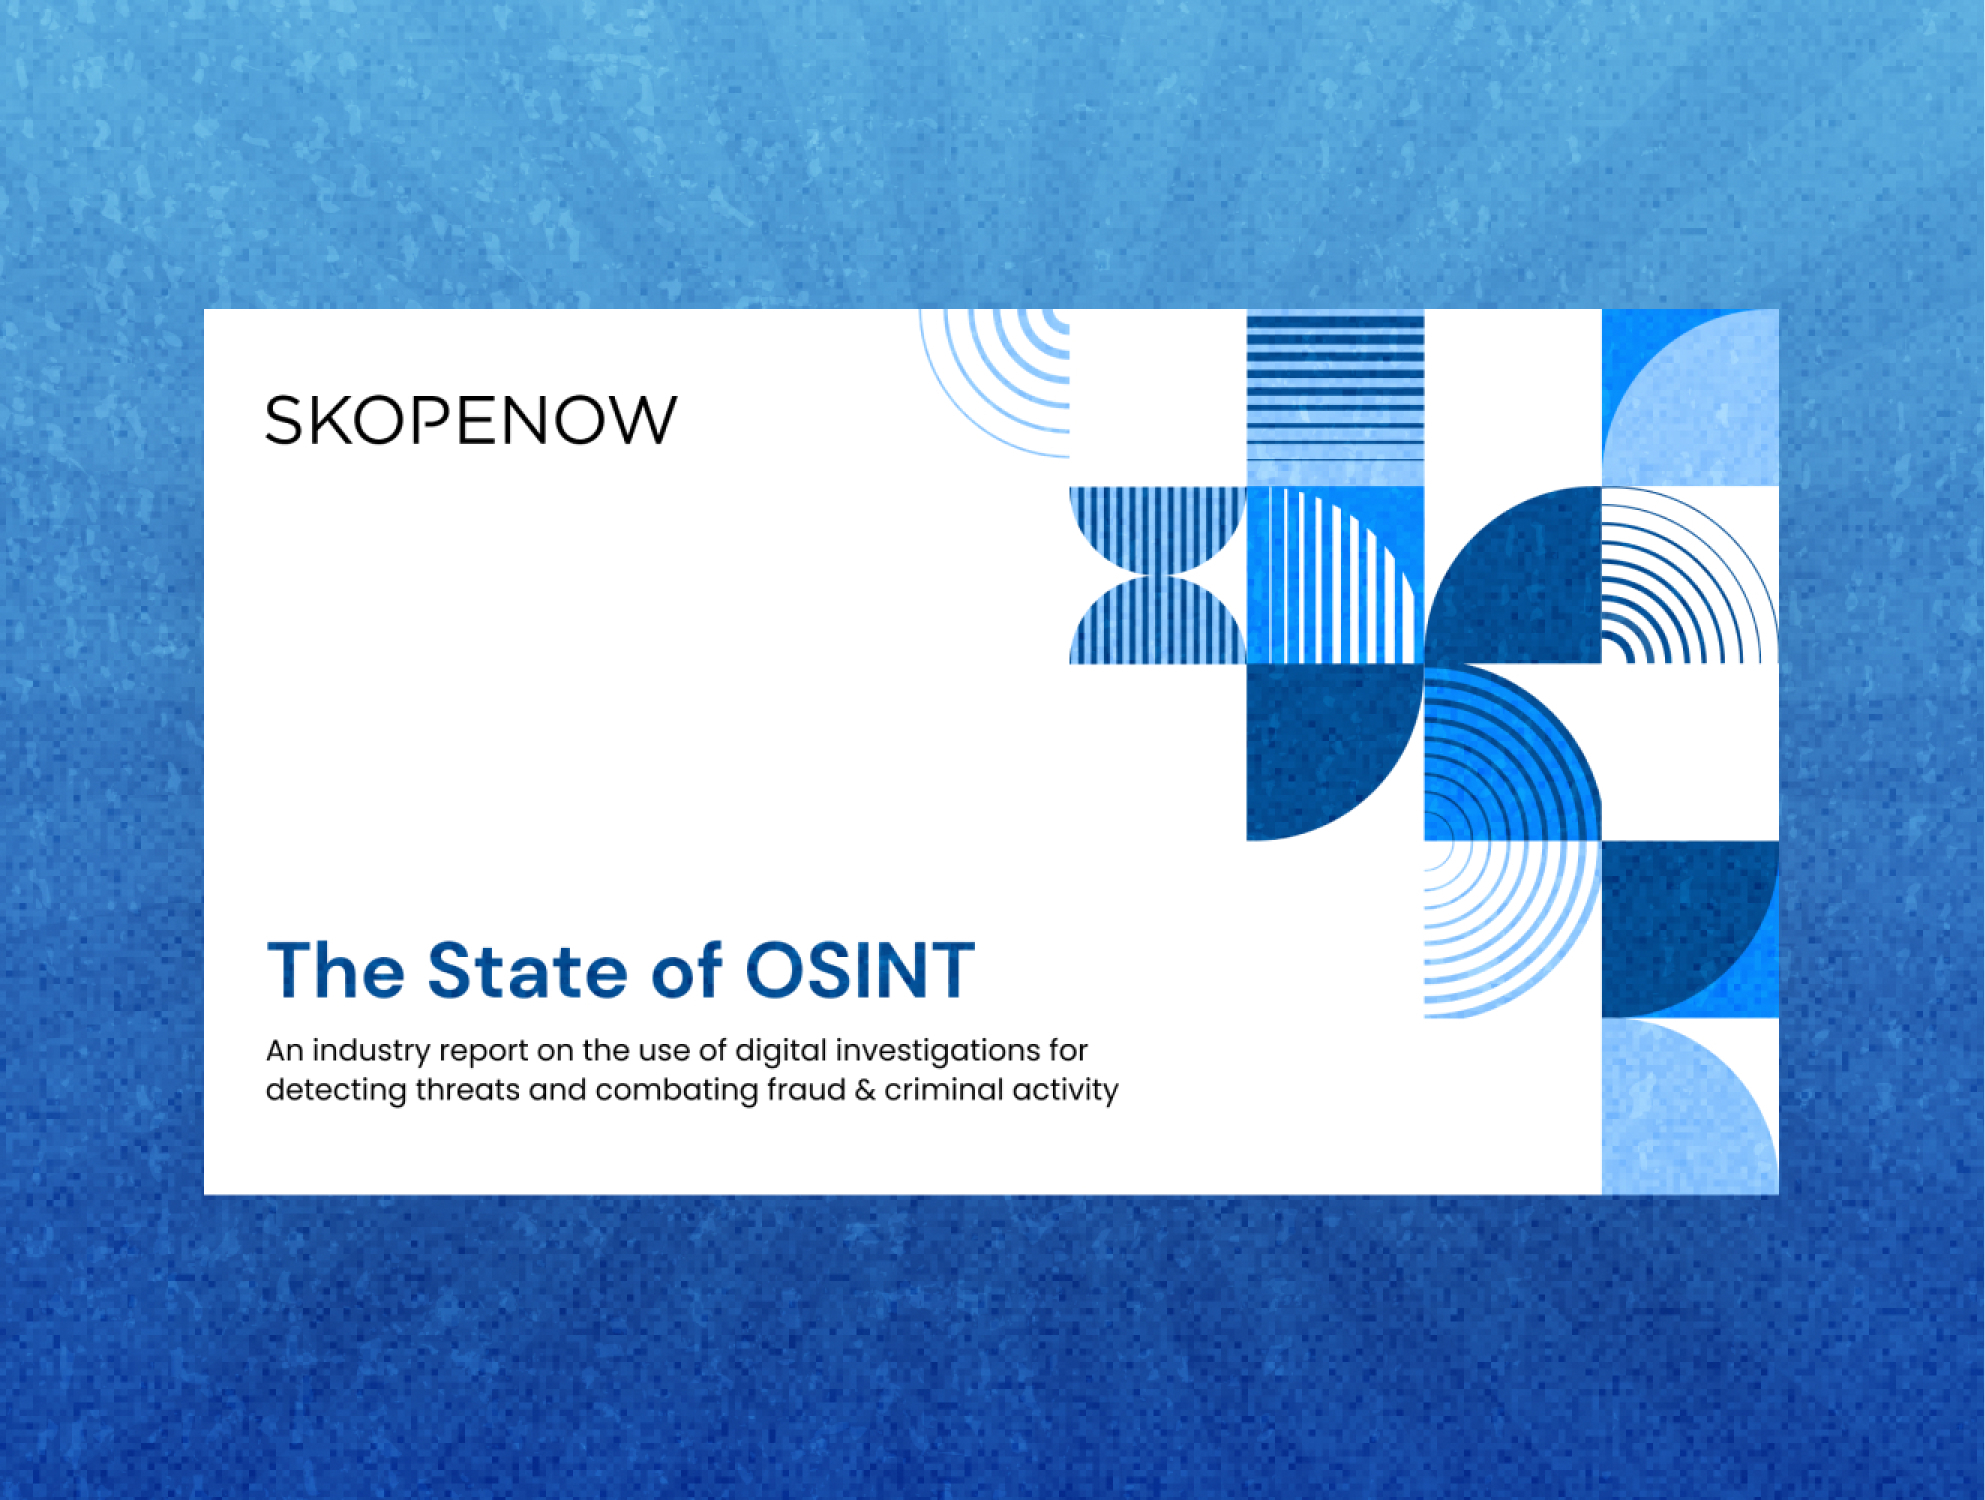 Skopenow-State-of-OSINT-image